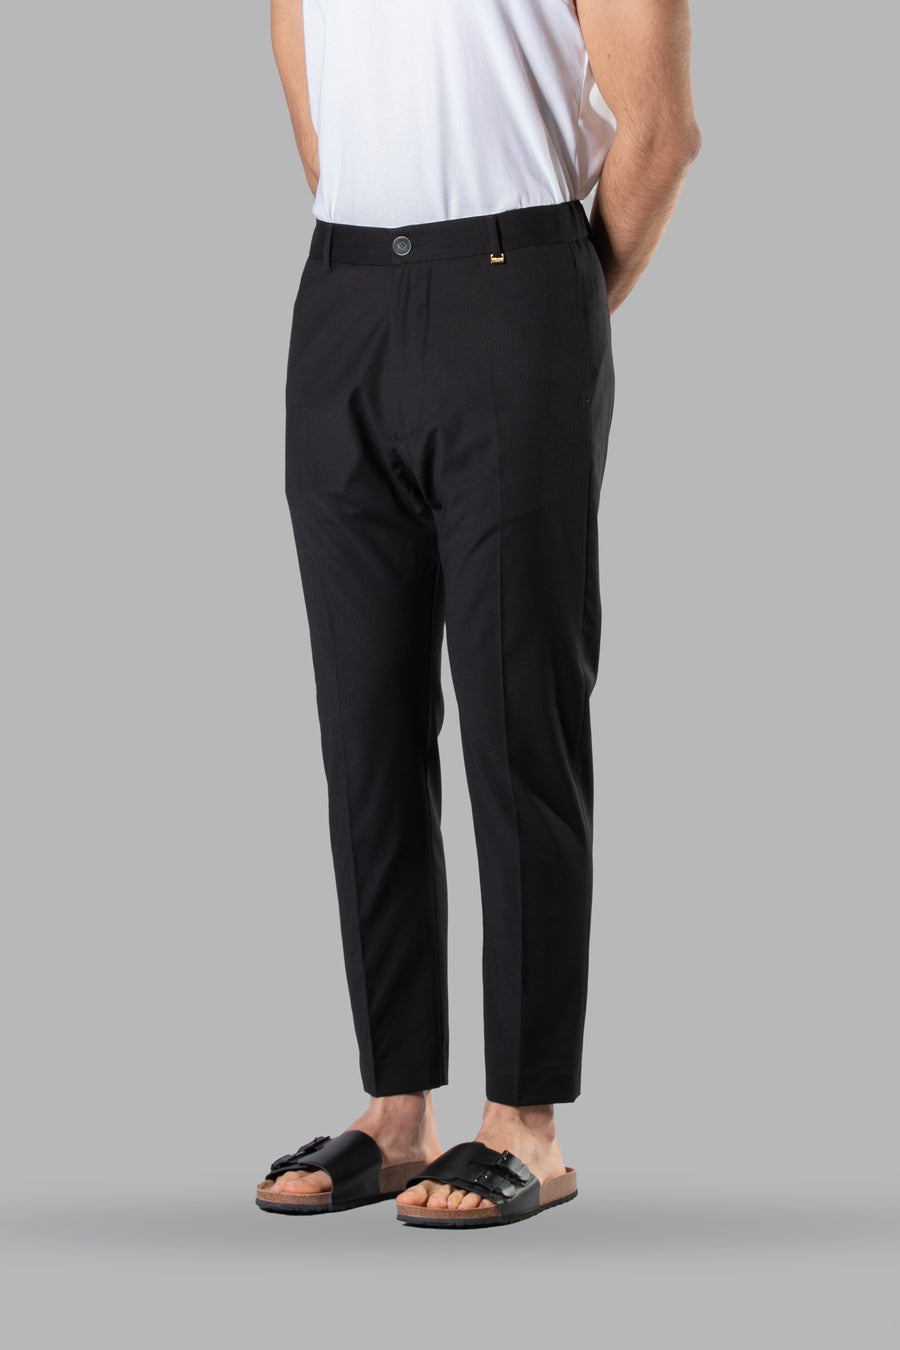 Pantalone con elastico retro regular fit - Nero